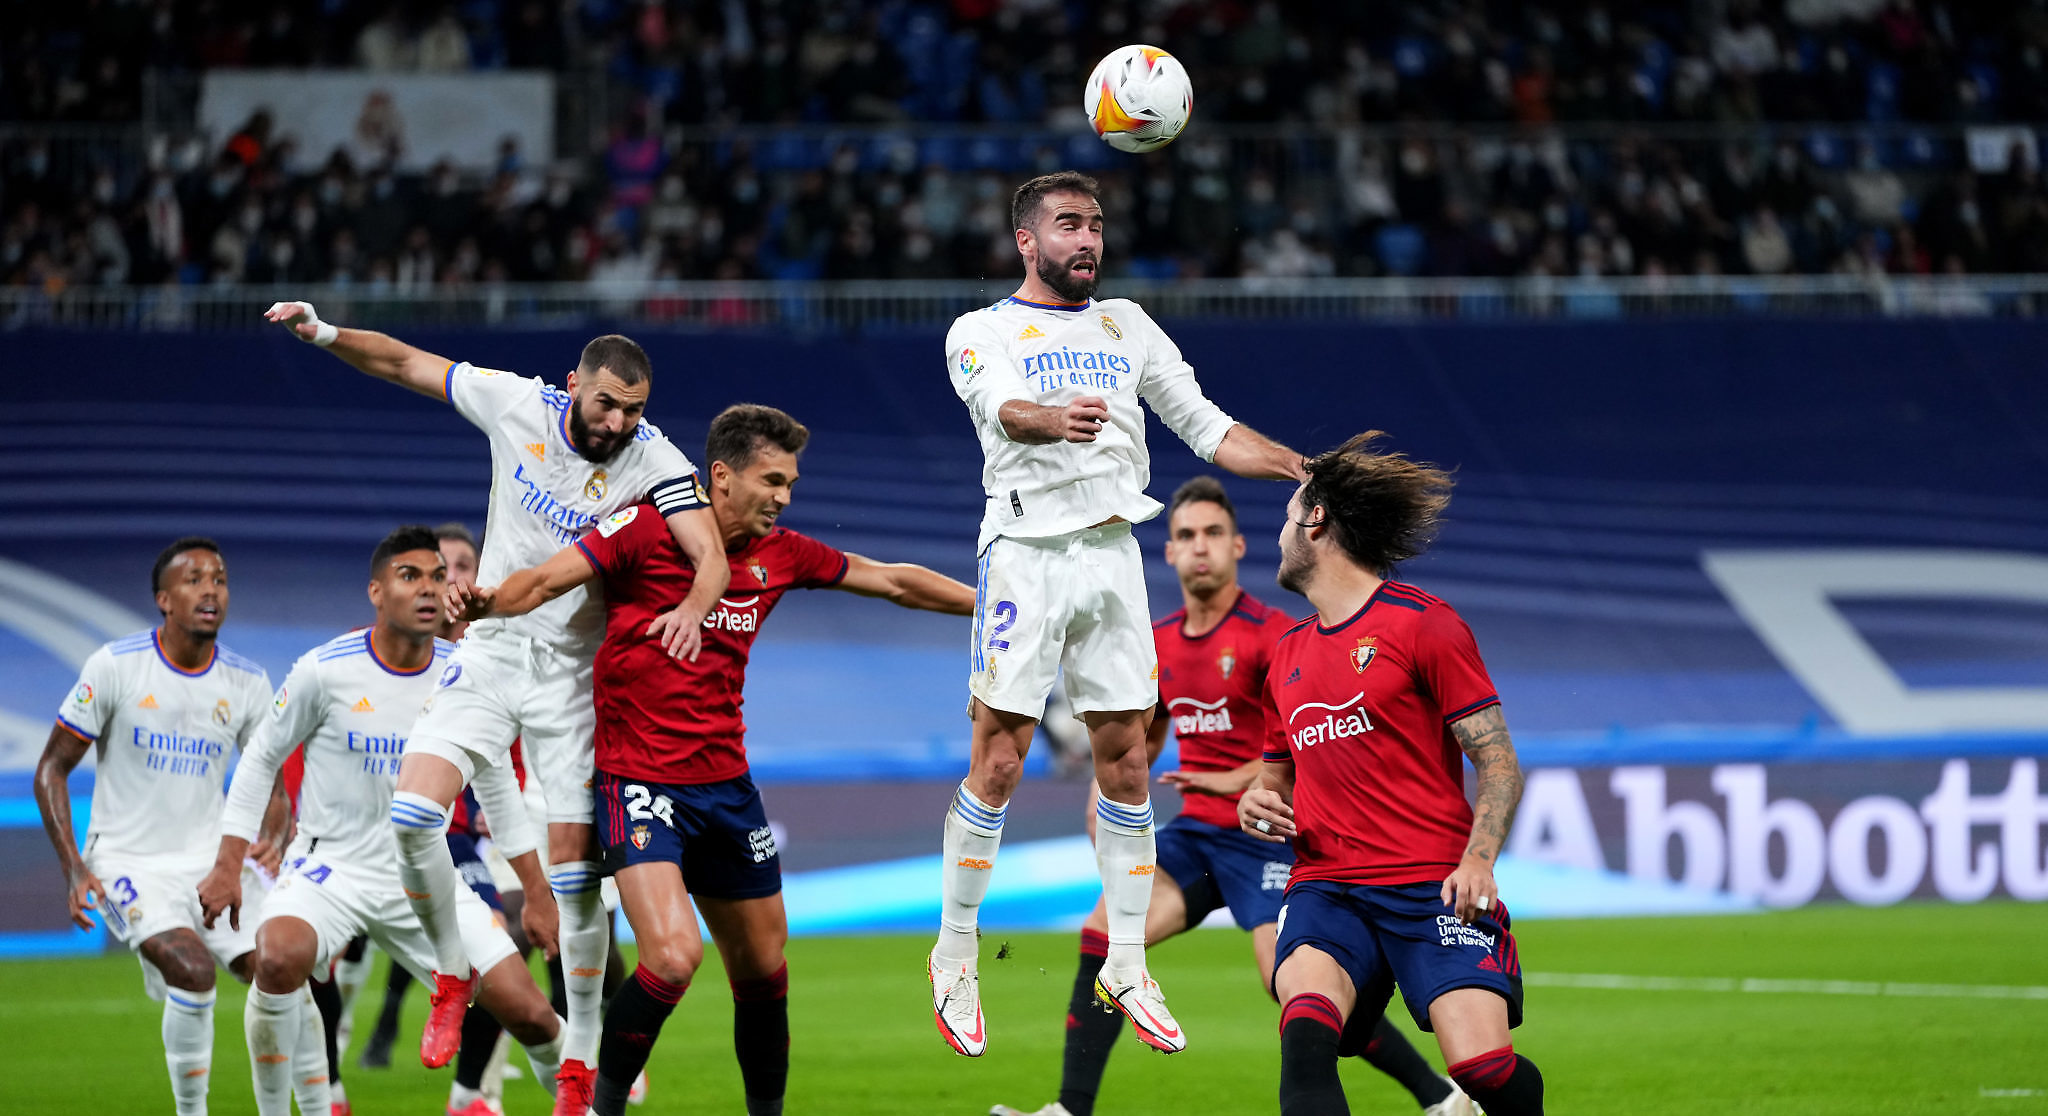 Calificaciones Blancas | Real Madrid 0-0 C. A. Osasuna